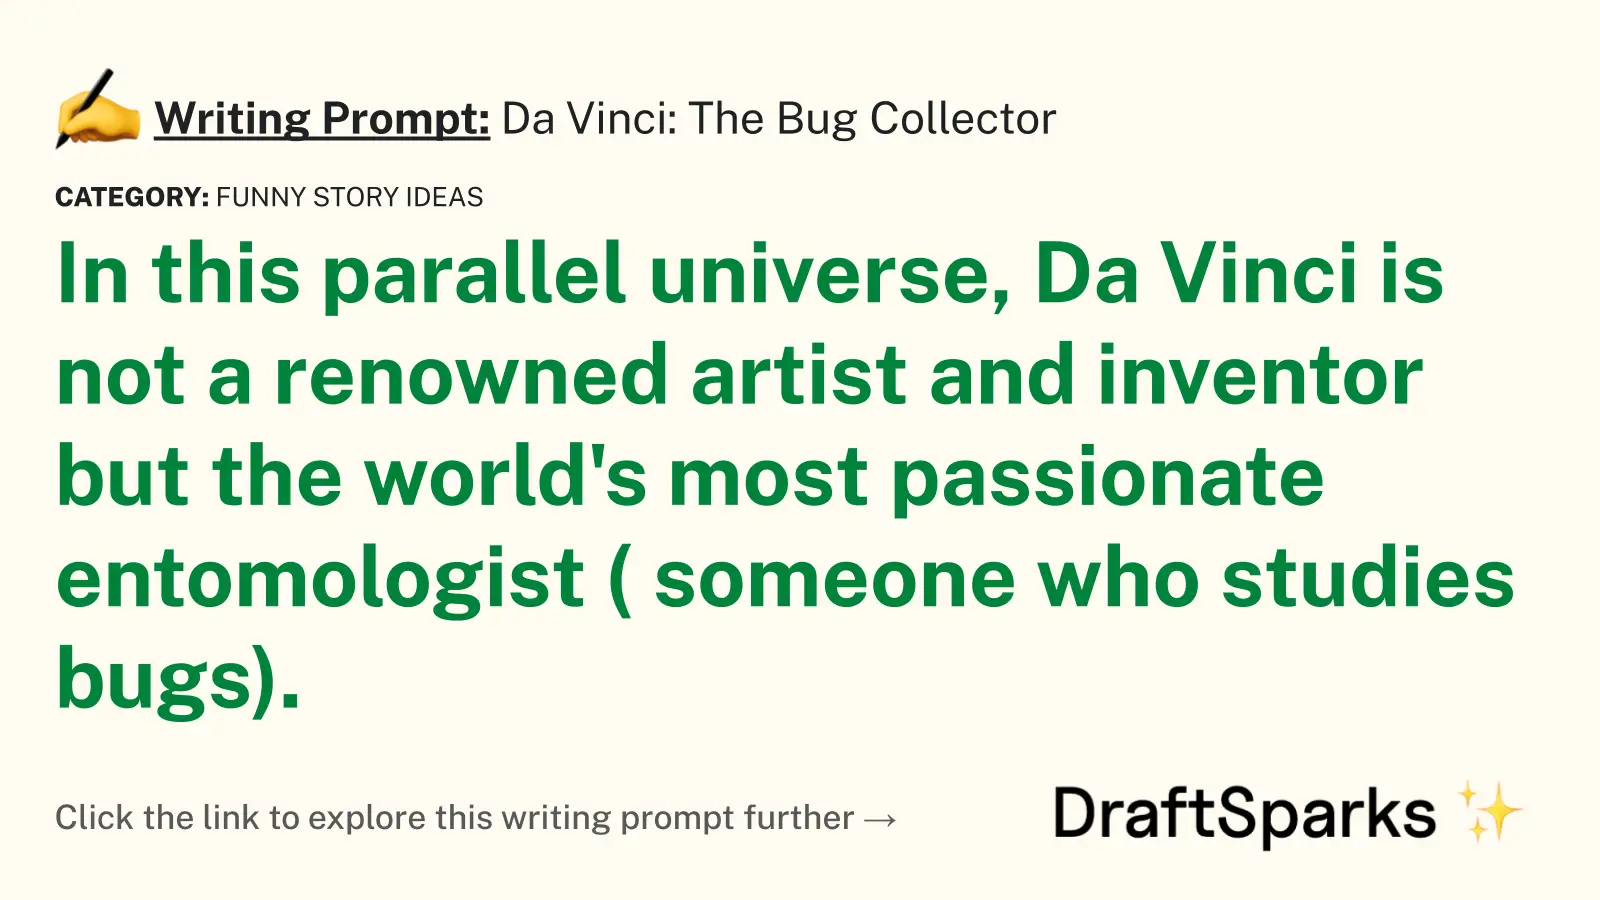 Da Vinci: The Bug Collector